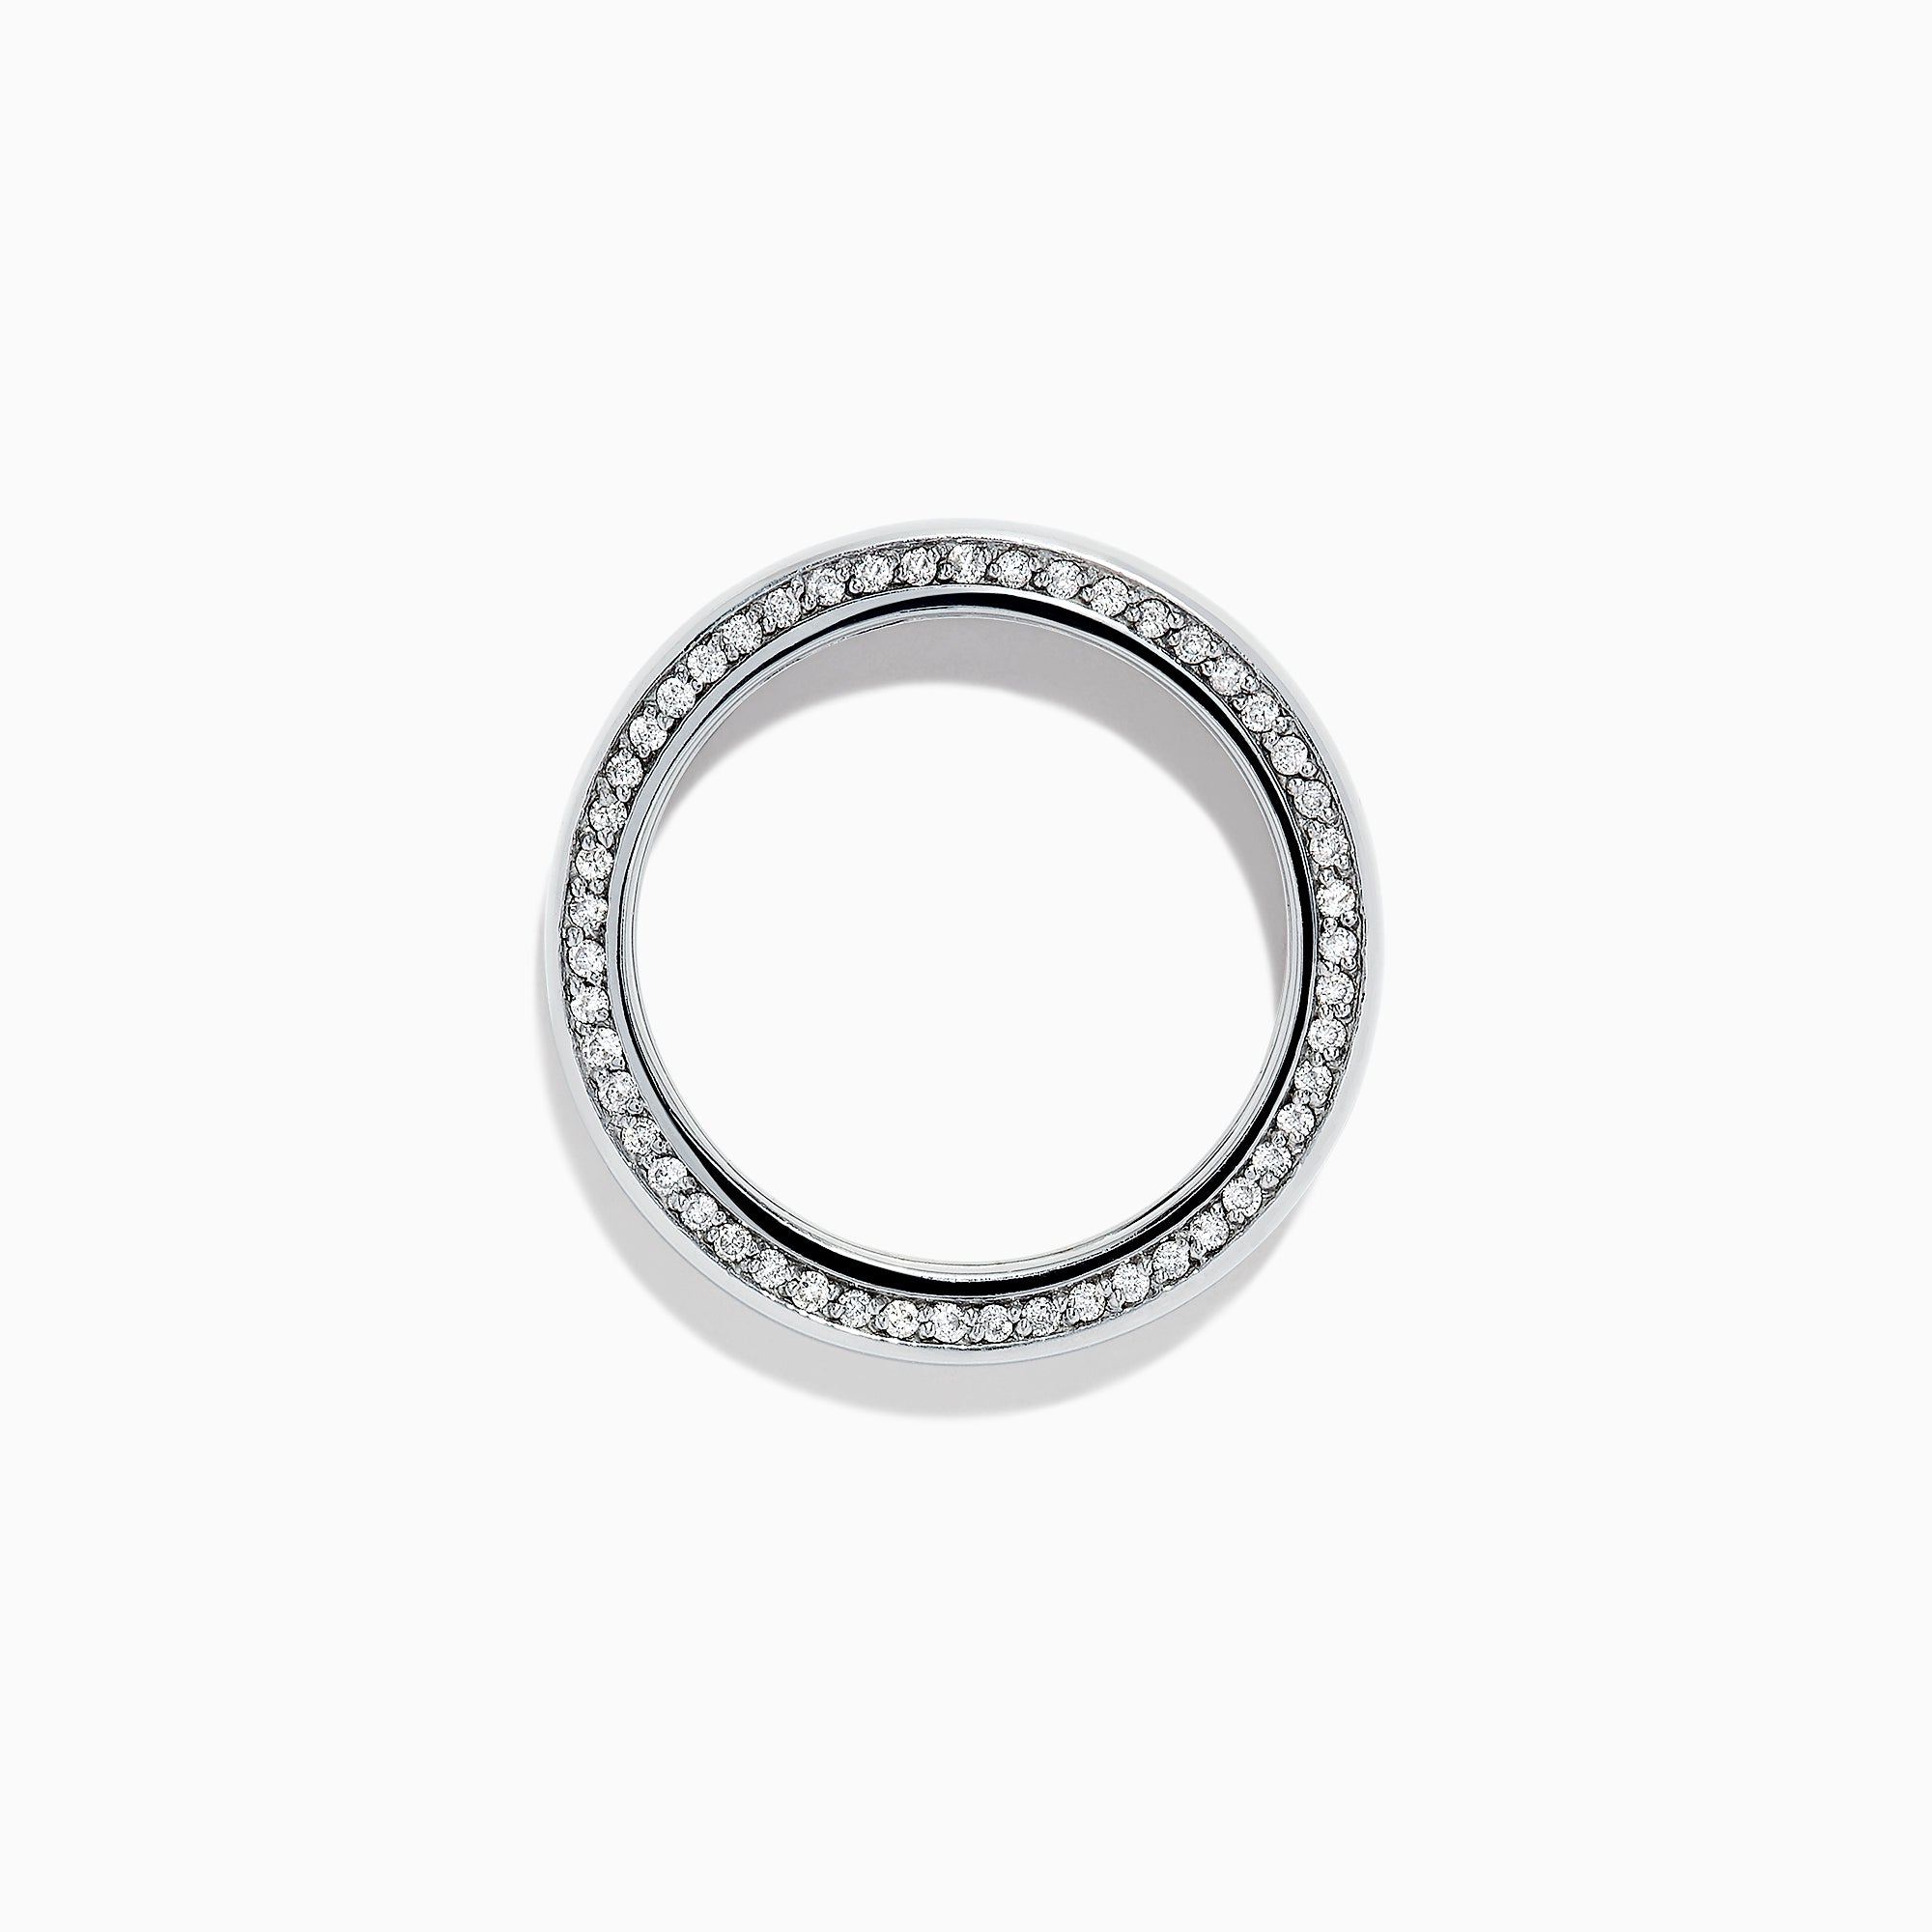 Effy Men's 14K White Gold Diamond Ring, 0.74 TCW